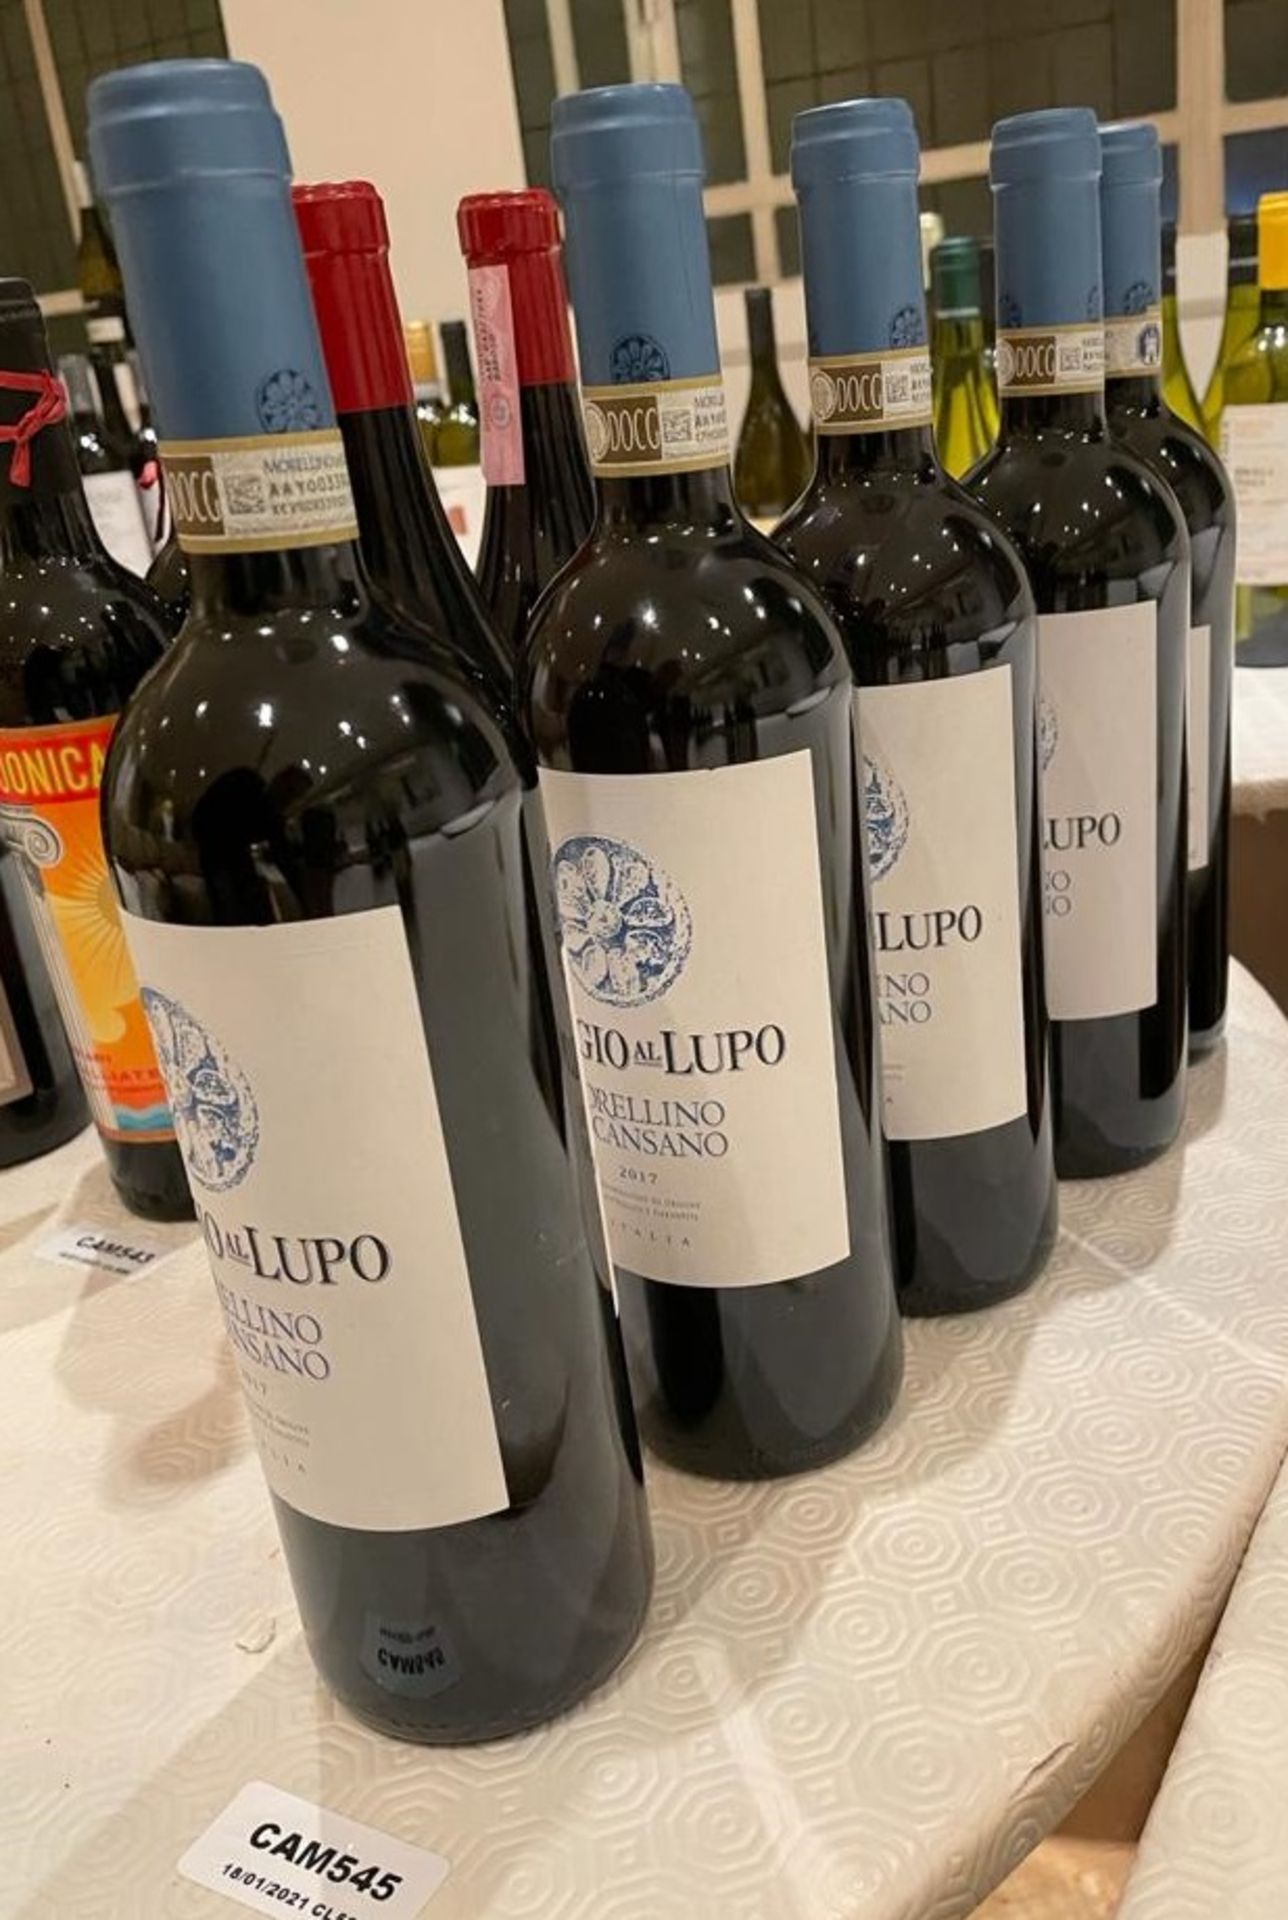 5 x Bottles Of POGGIA AL LUPO MORELLINO D'SCARISANO - 2017 - 750ml - New/Unopened Restaurant Stock - Image 3 of 3